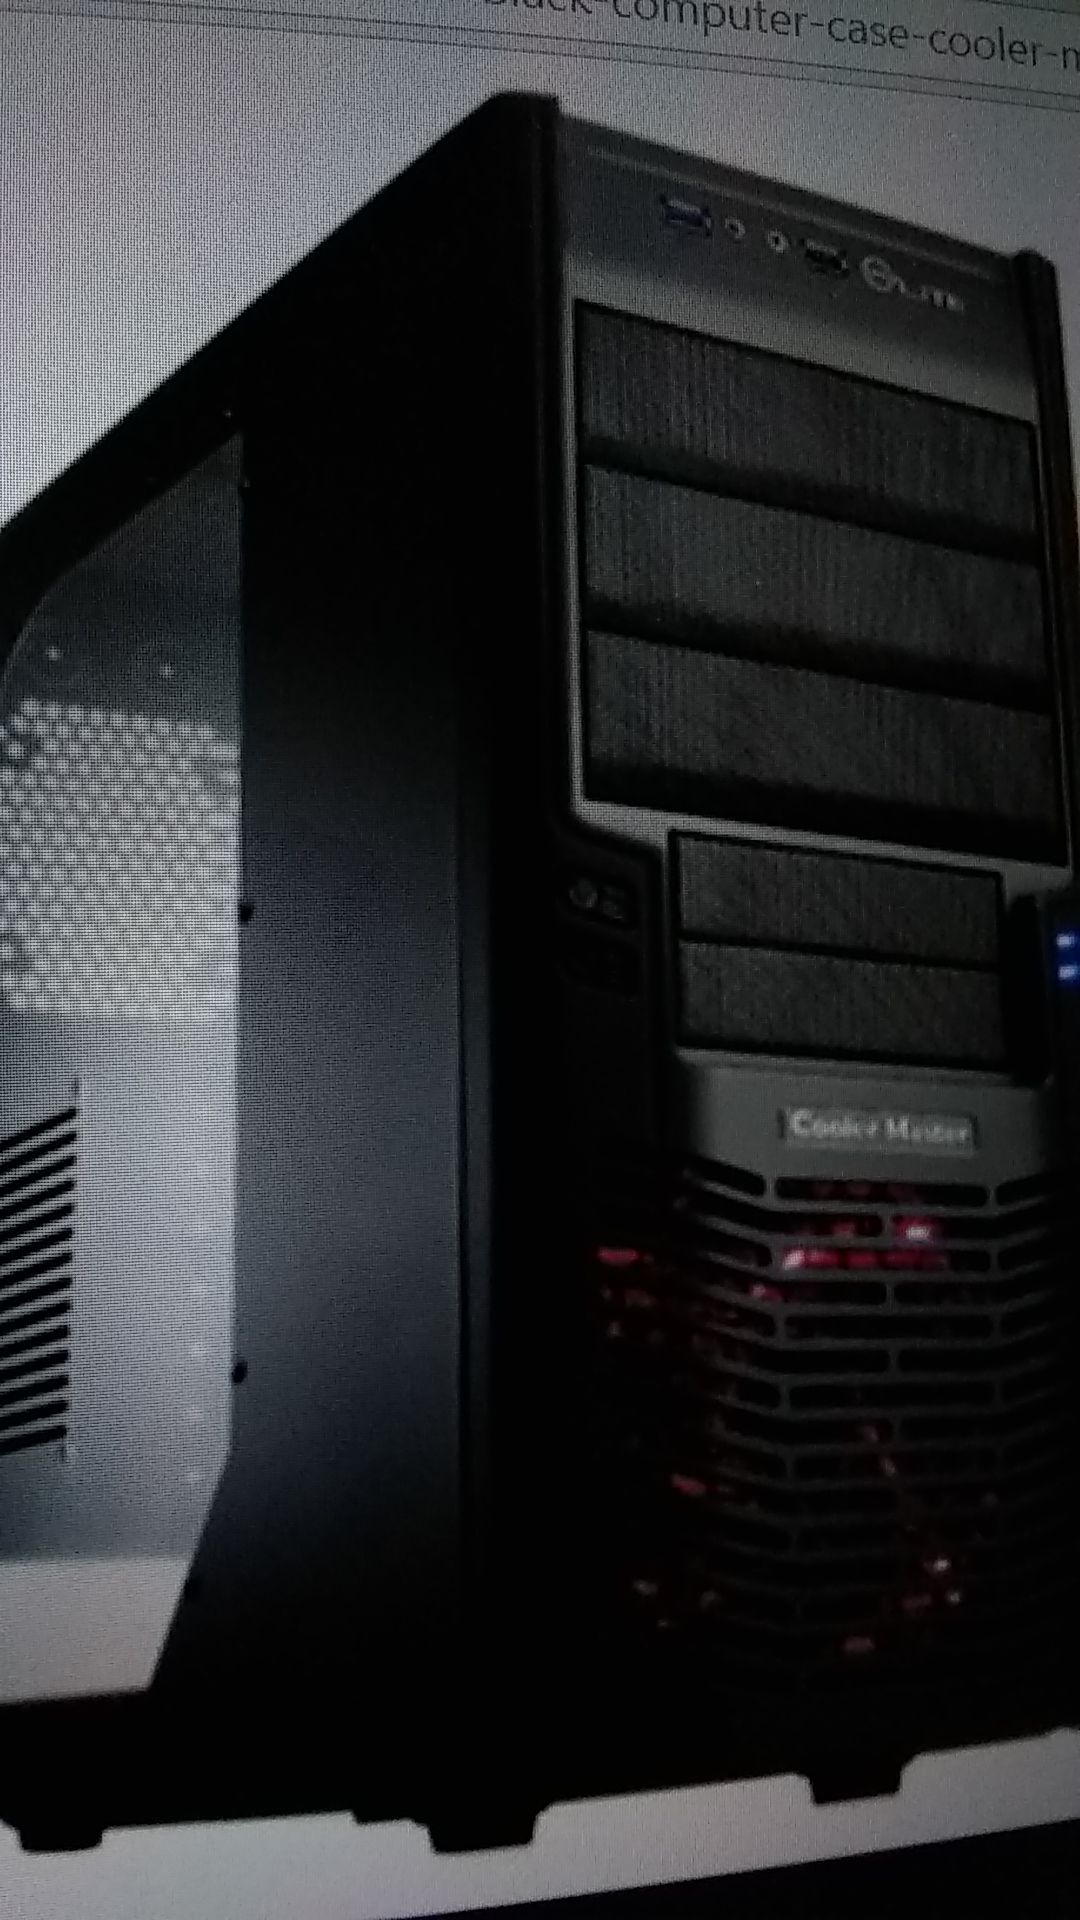 New sealed box Elite 430 Cooler Master Gaming Computer Case near I75